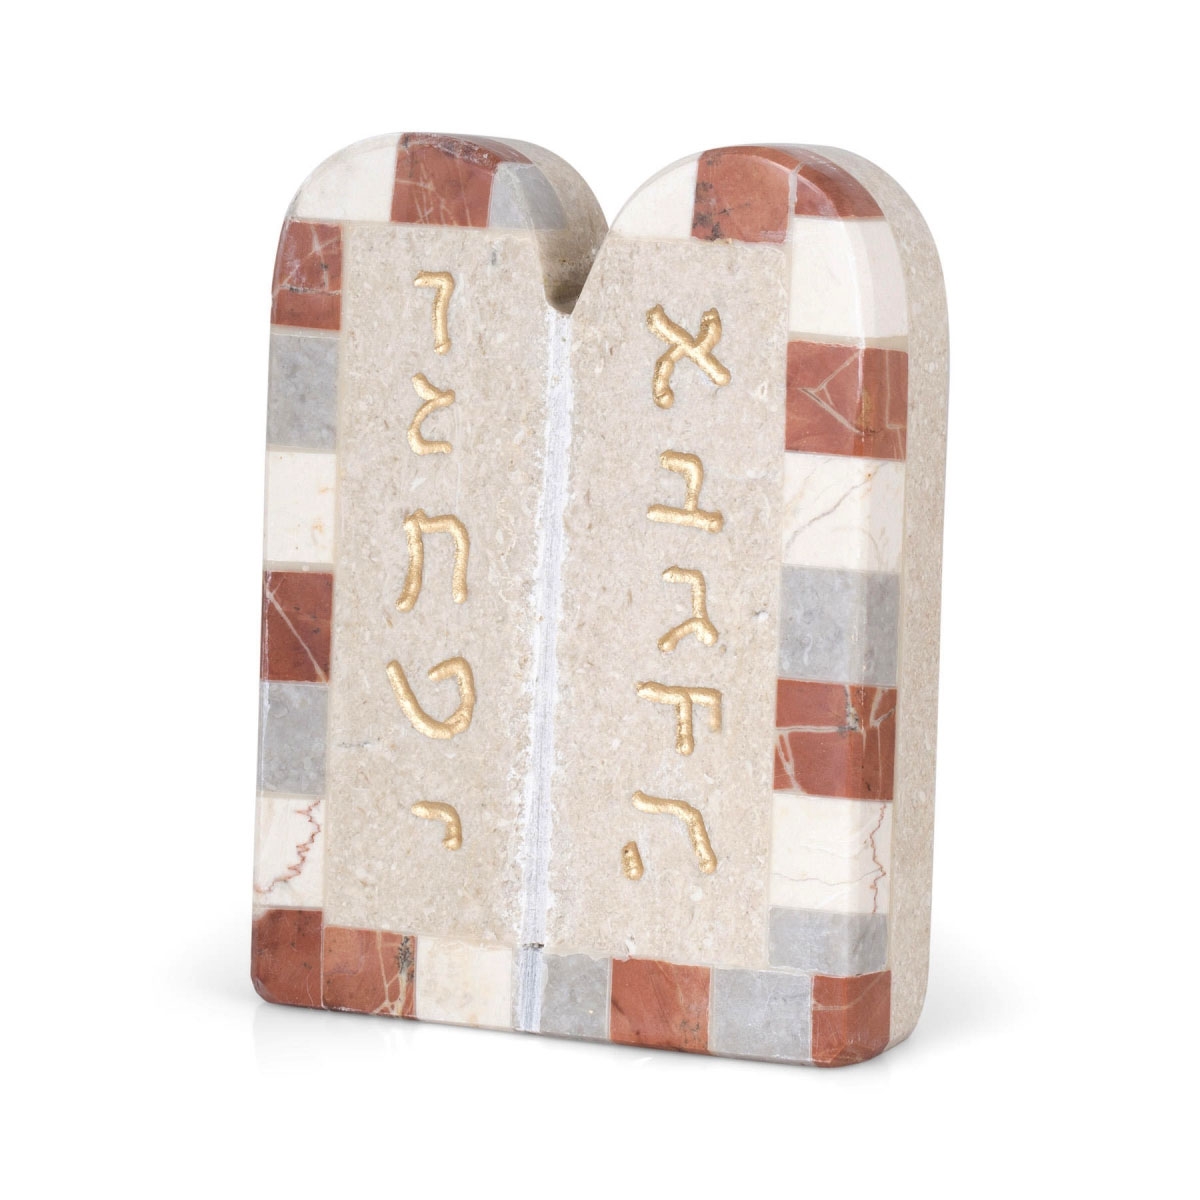 Red Jerusalem Stone Ten Commandments Sculpture with Mosaic Border - Range of Sizes - 1